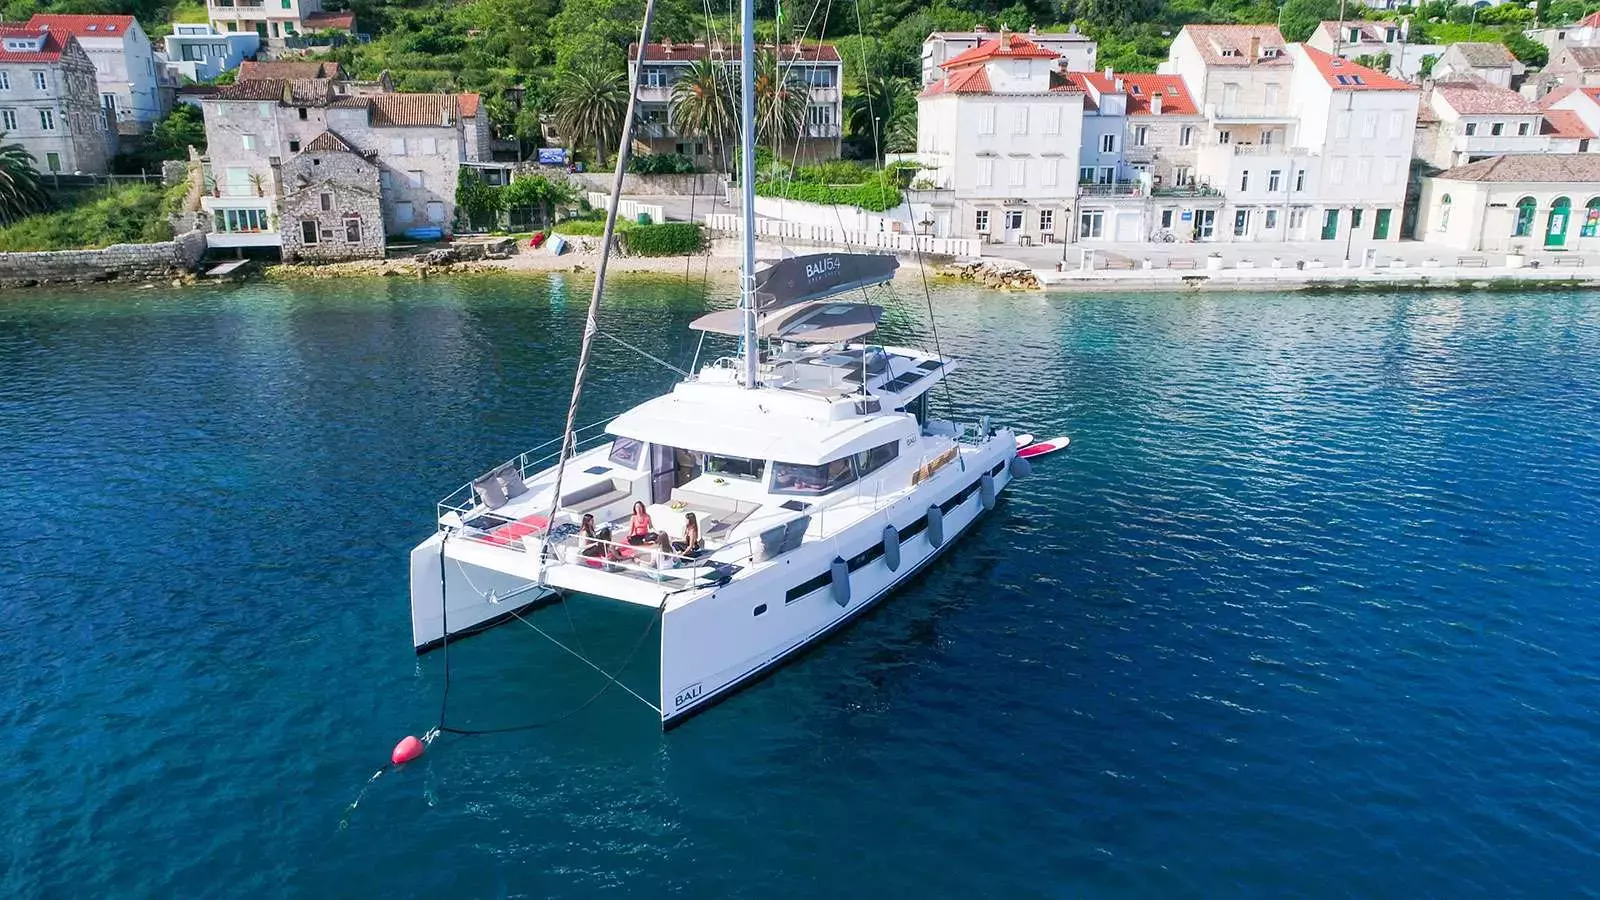 Namaste of Bali by Bali Catamarans - Top rates for a Rental of a private Sailing Catamaran in Croatia